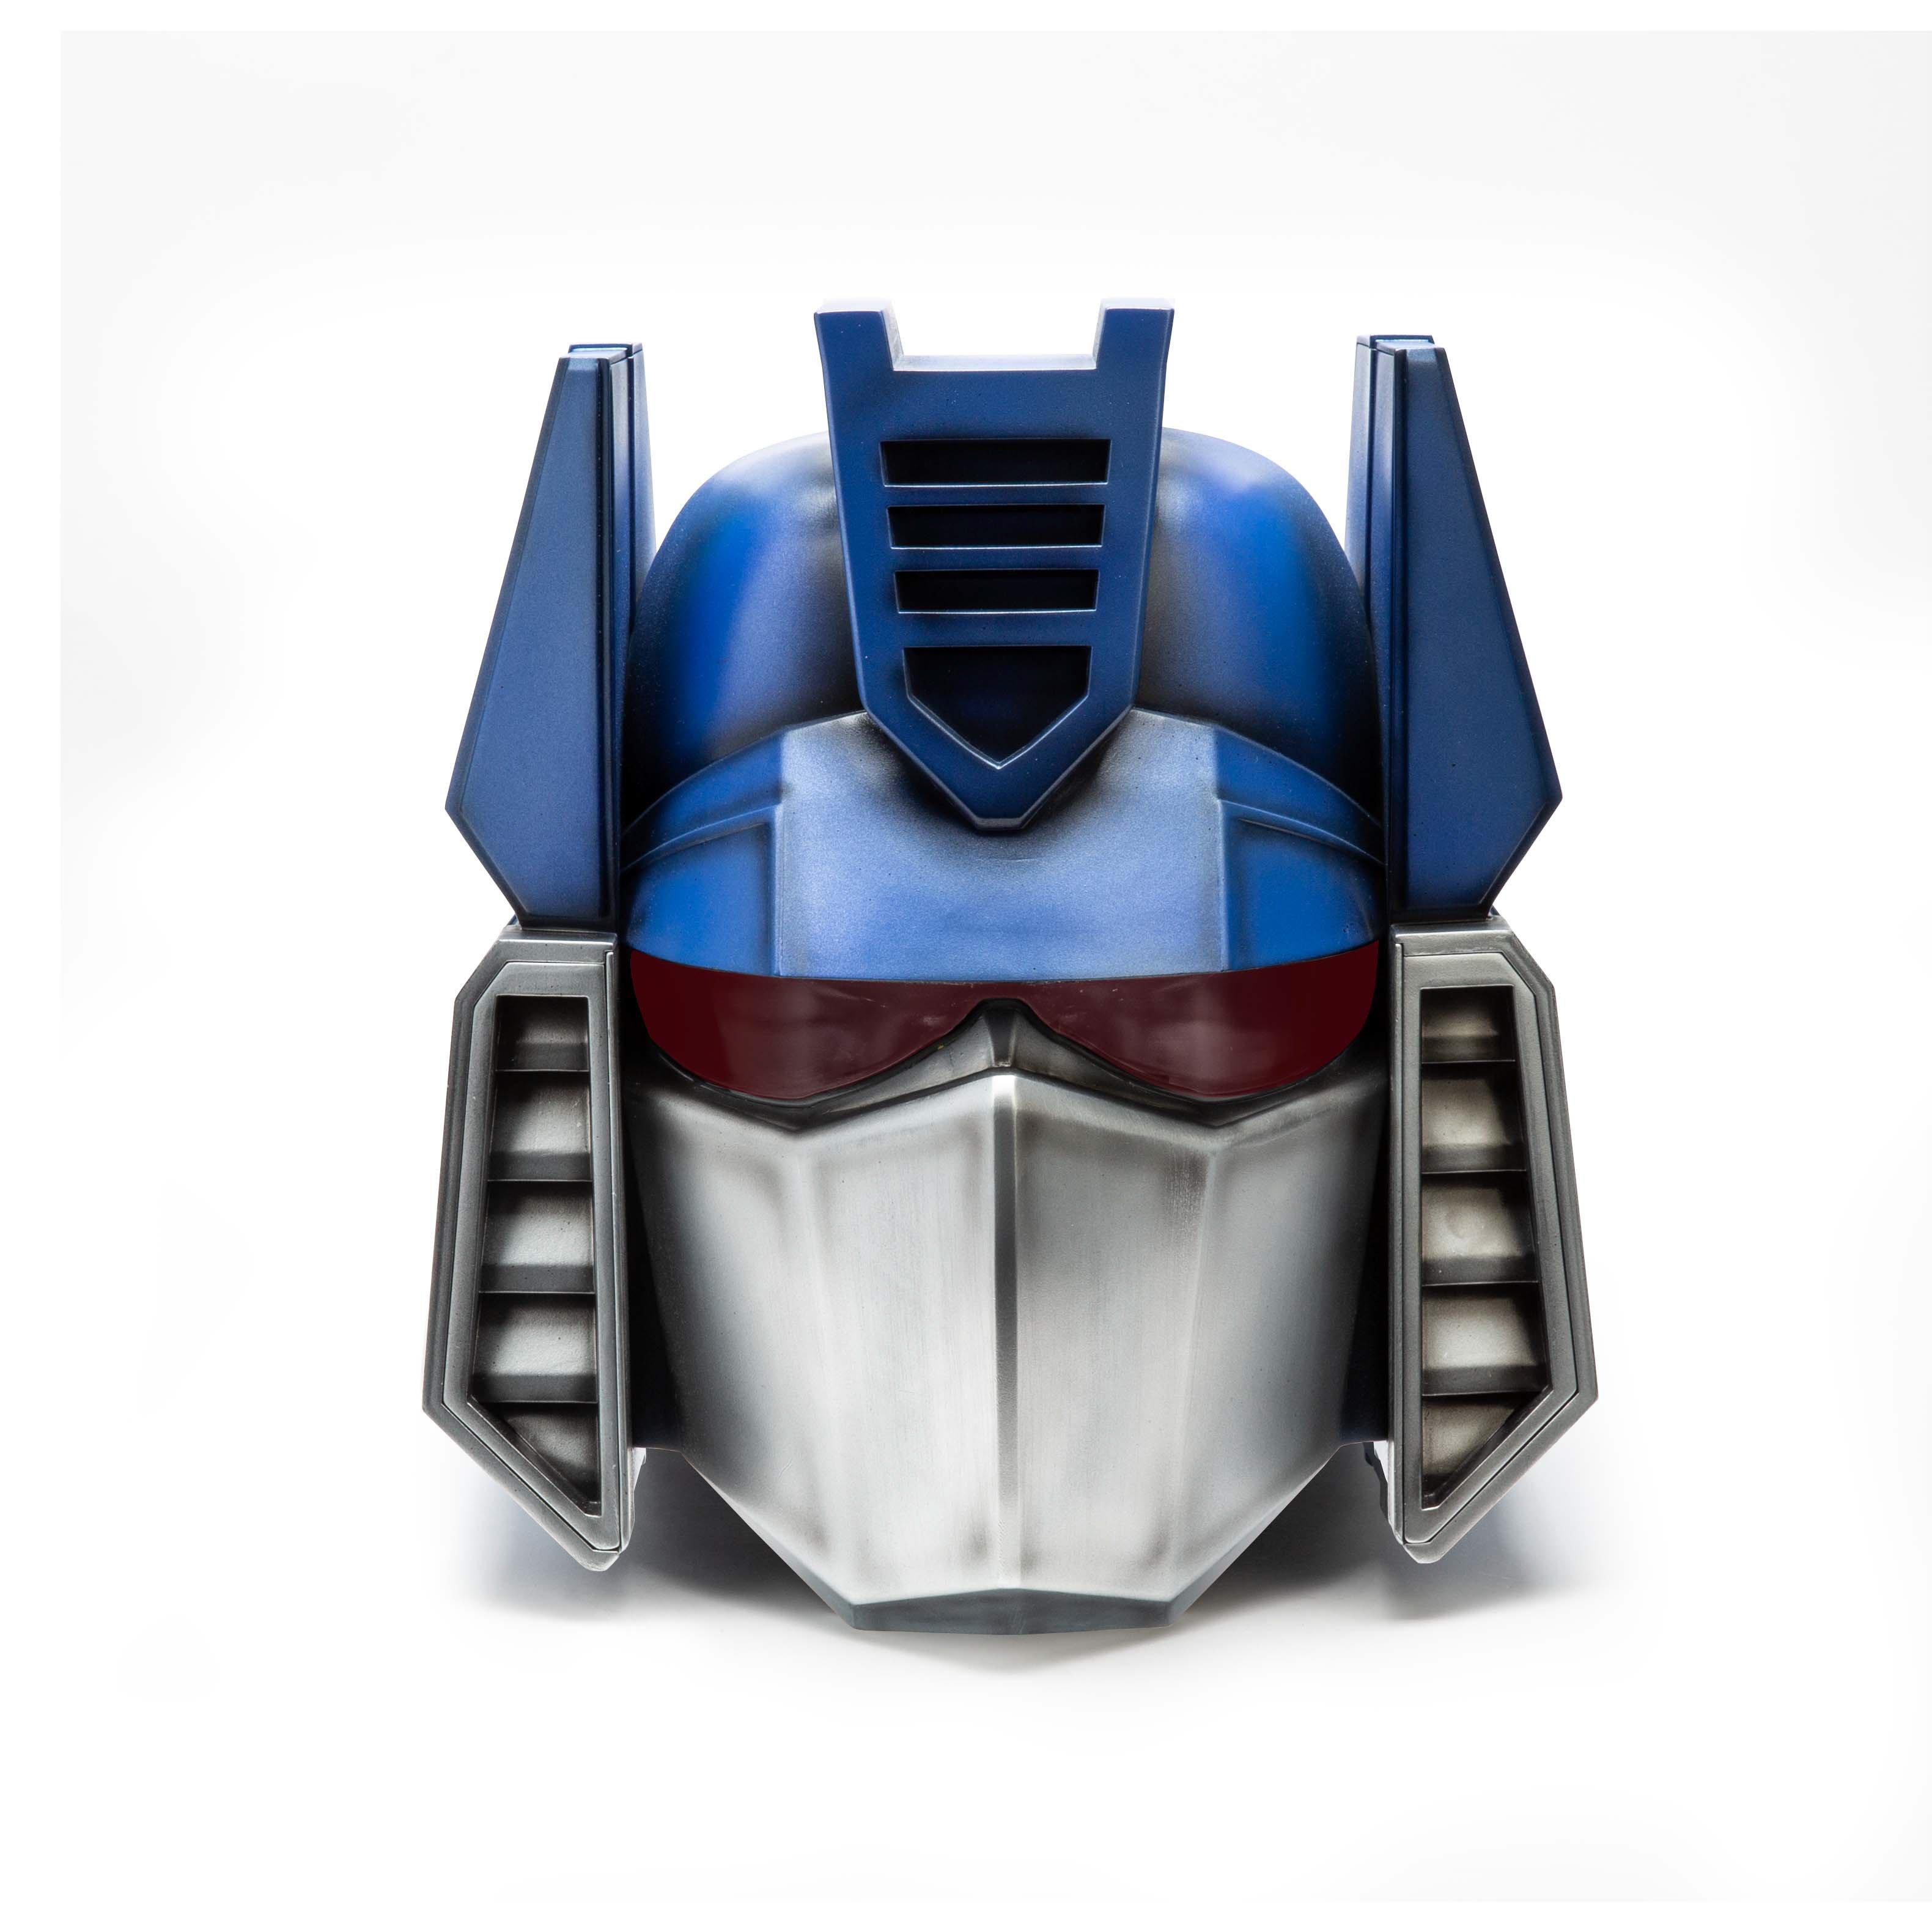 https://media.gamestop.com/i/gamestop/11145804/Hasbro-Modern-Icons-Transformers-Soundwave-Helmet-Replica-GameStop-Exclusive